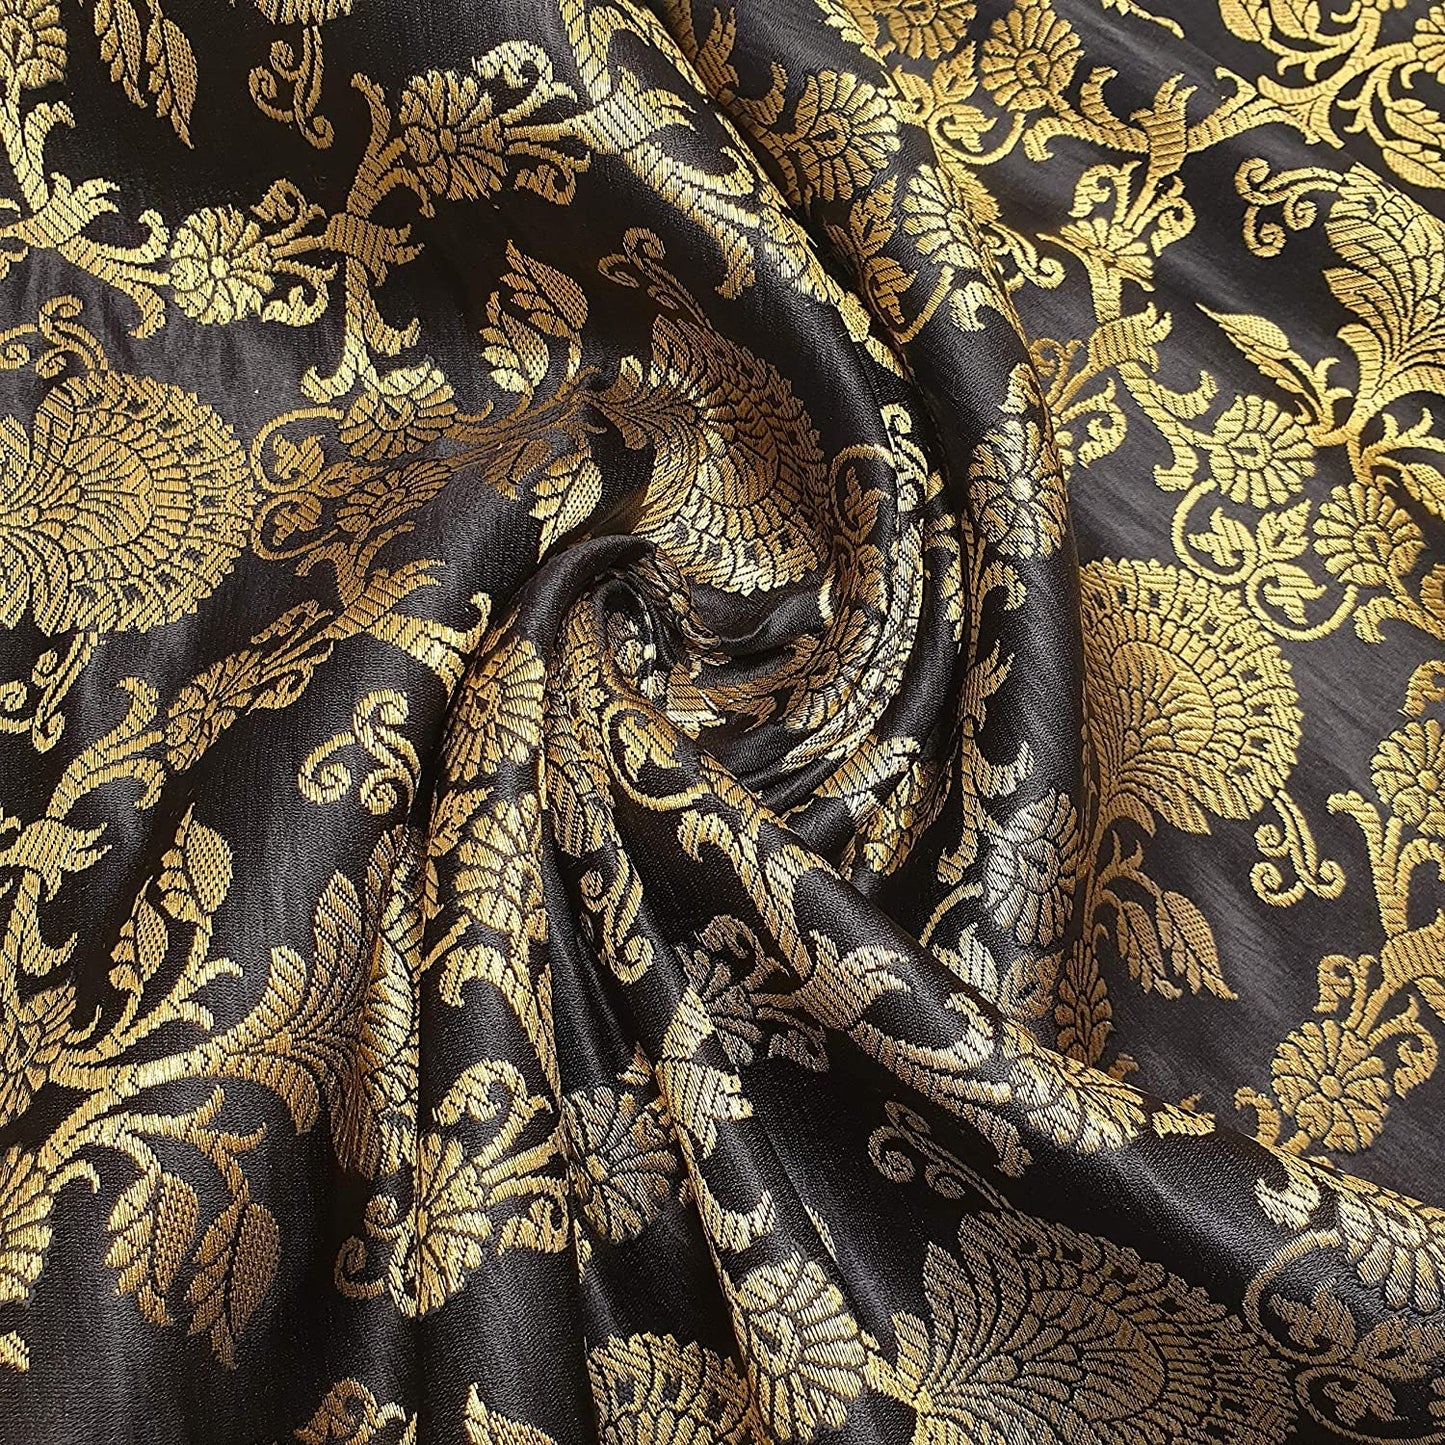 Ornamental Floral Gold Metallic Print Indian Banarasi Brocade Fabric (Black)